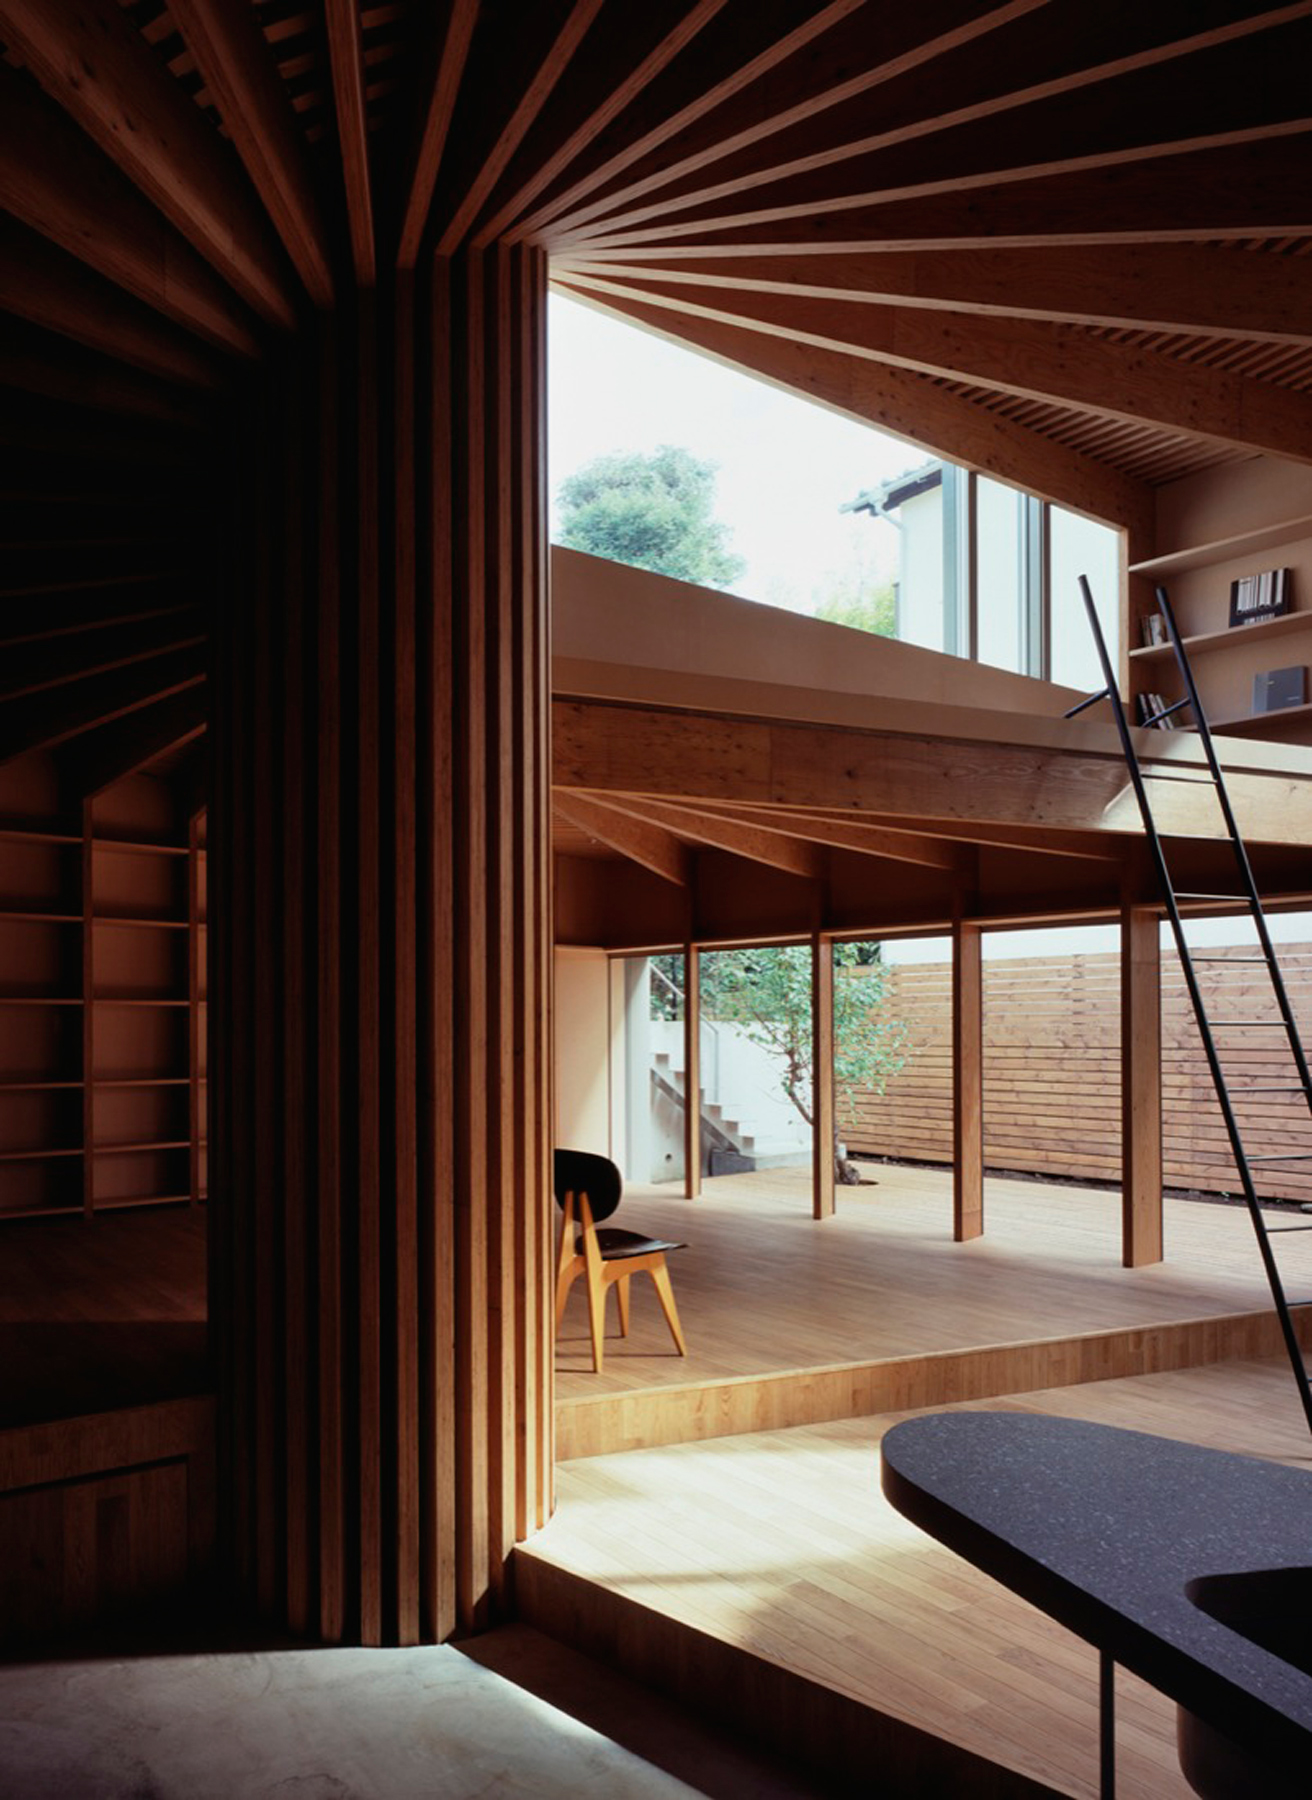 Tree House / Mount Fuji Architects Studio (25)